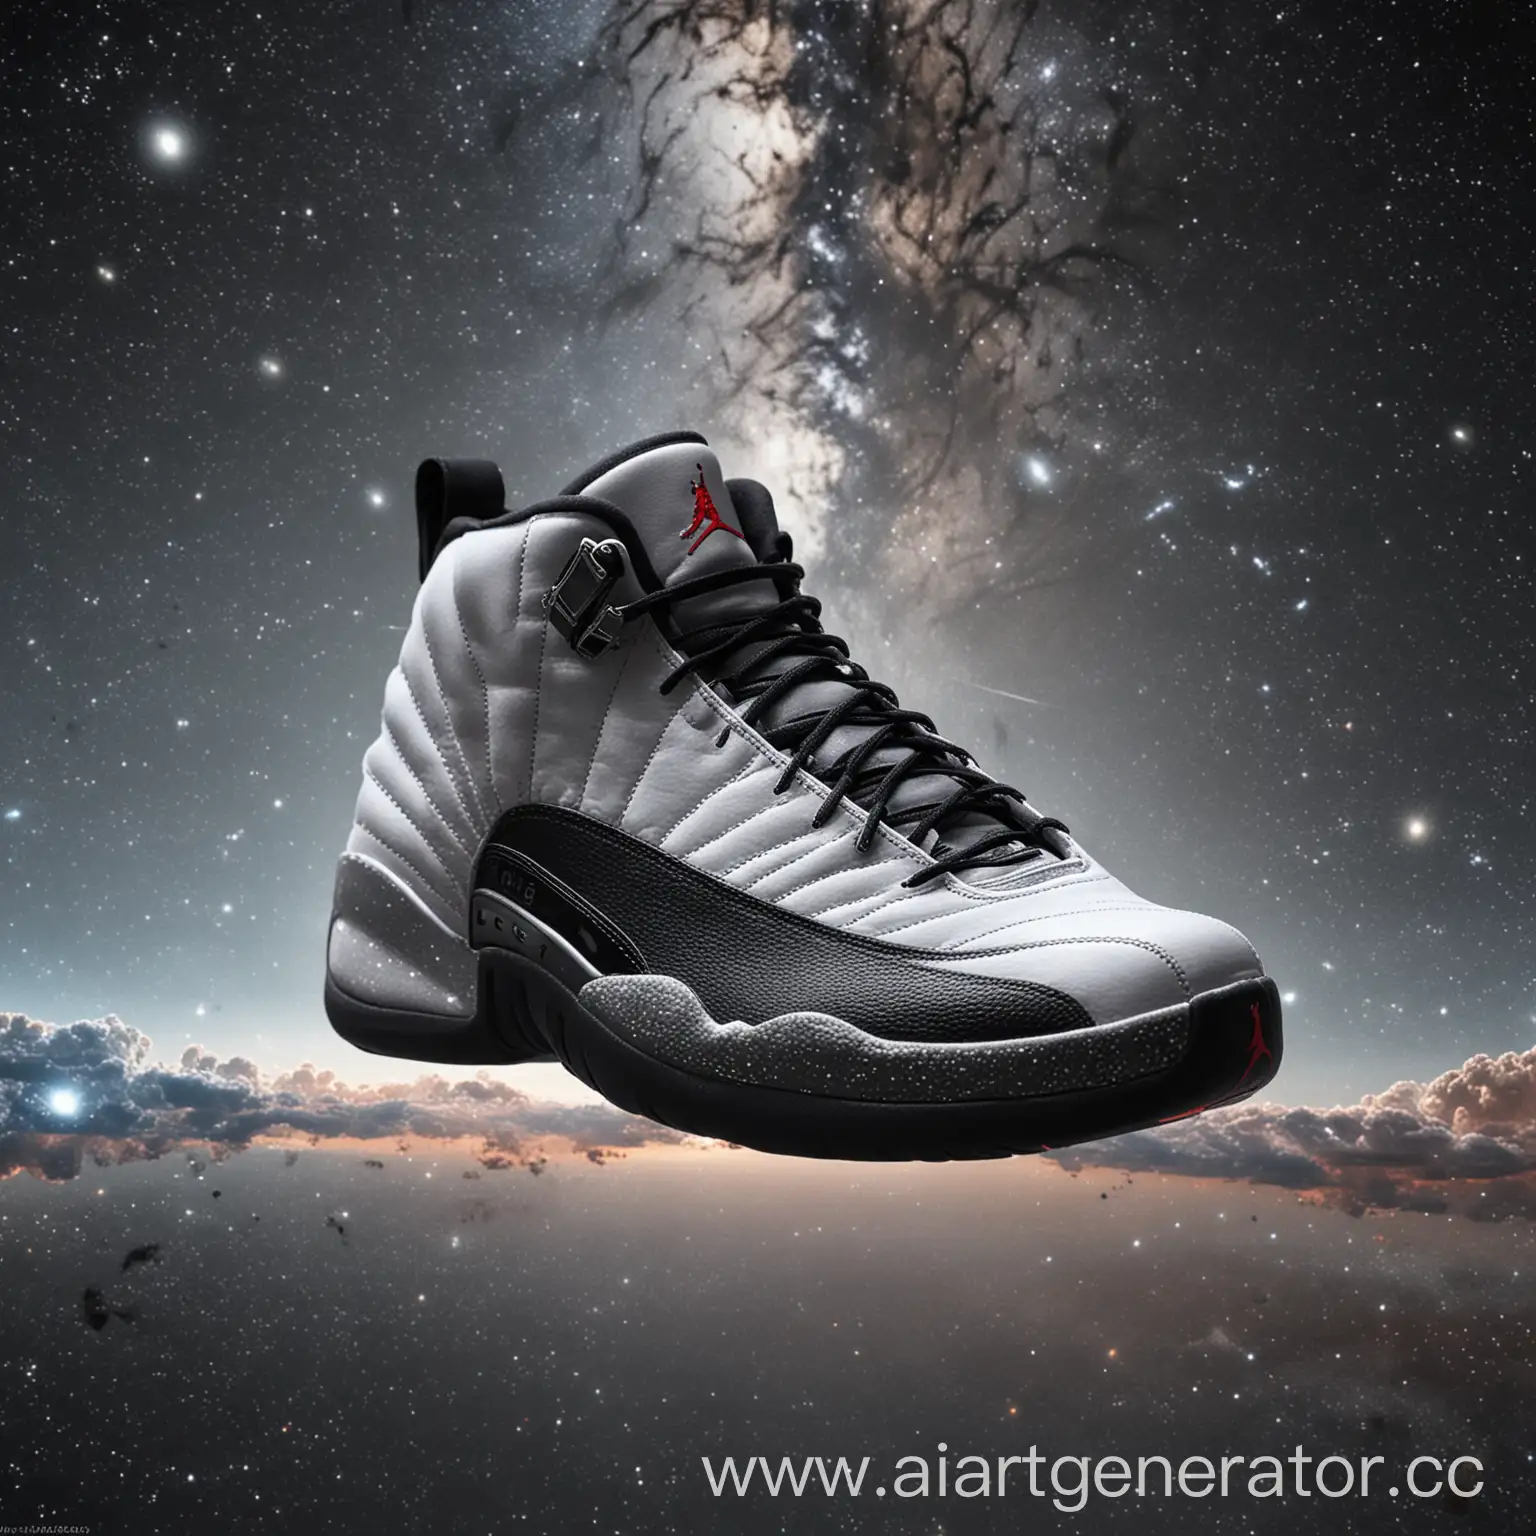 Nike-Air-Jordan-12-Sneakers-Floating-in-HighDefinition-Space-4K-Quality-Image